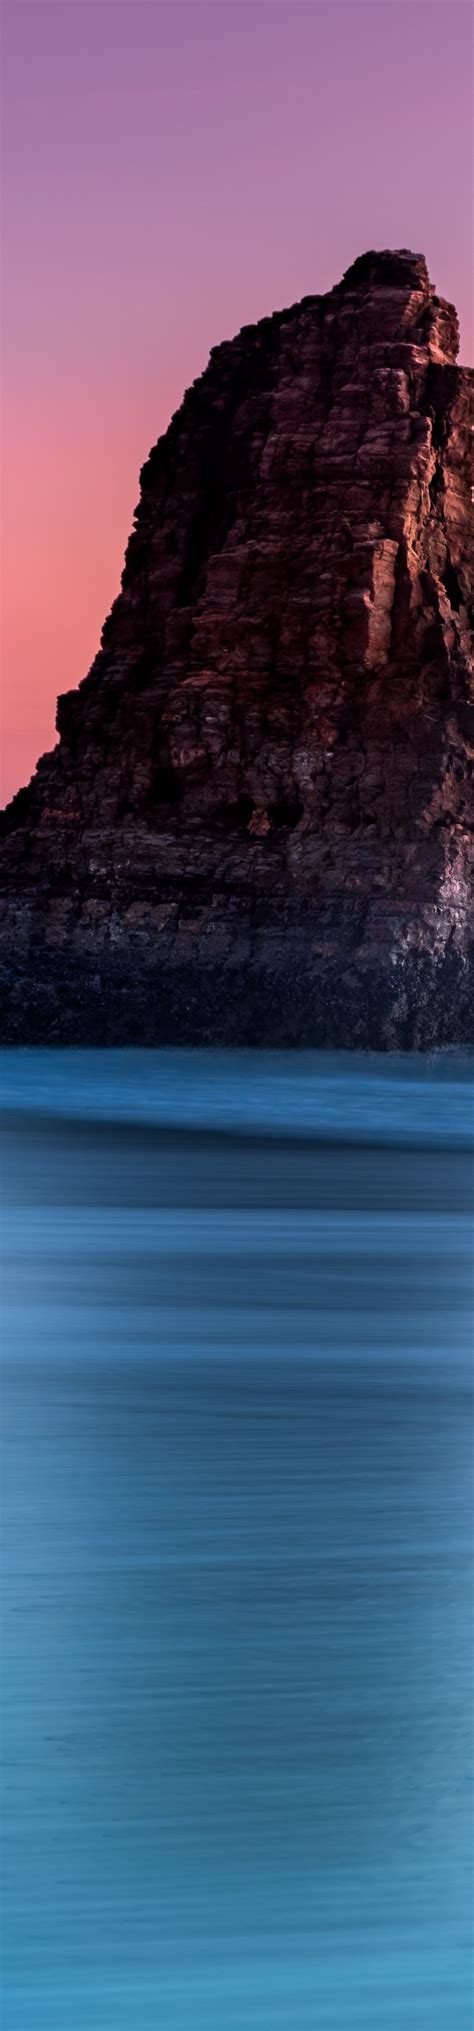 700x3000 Ocean 8k Gradient Sunset Photography 700x3000 Resolution